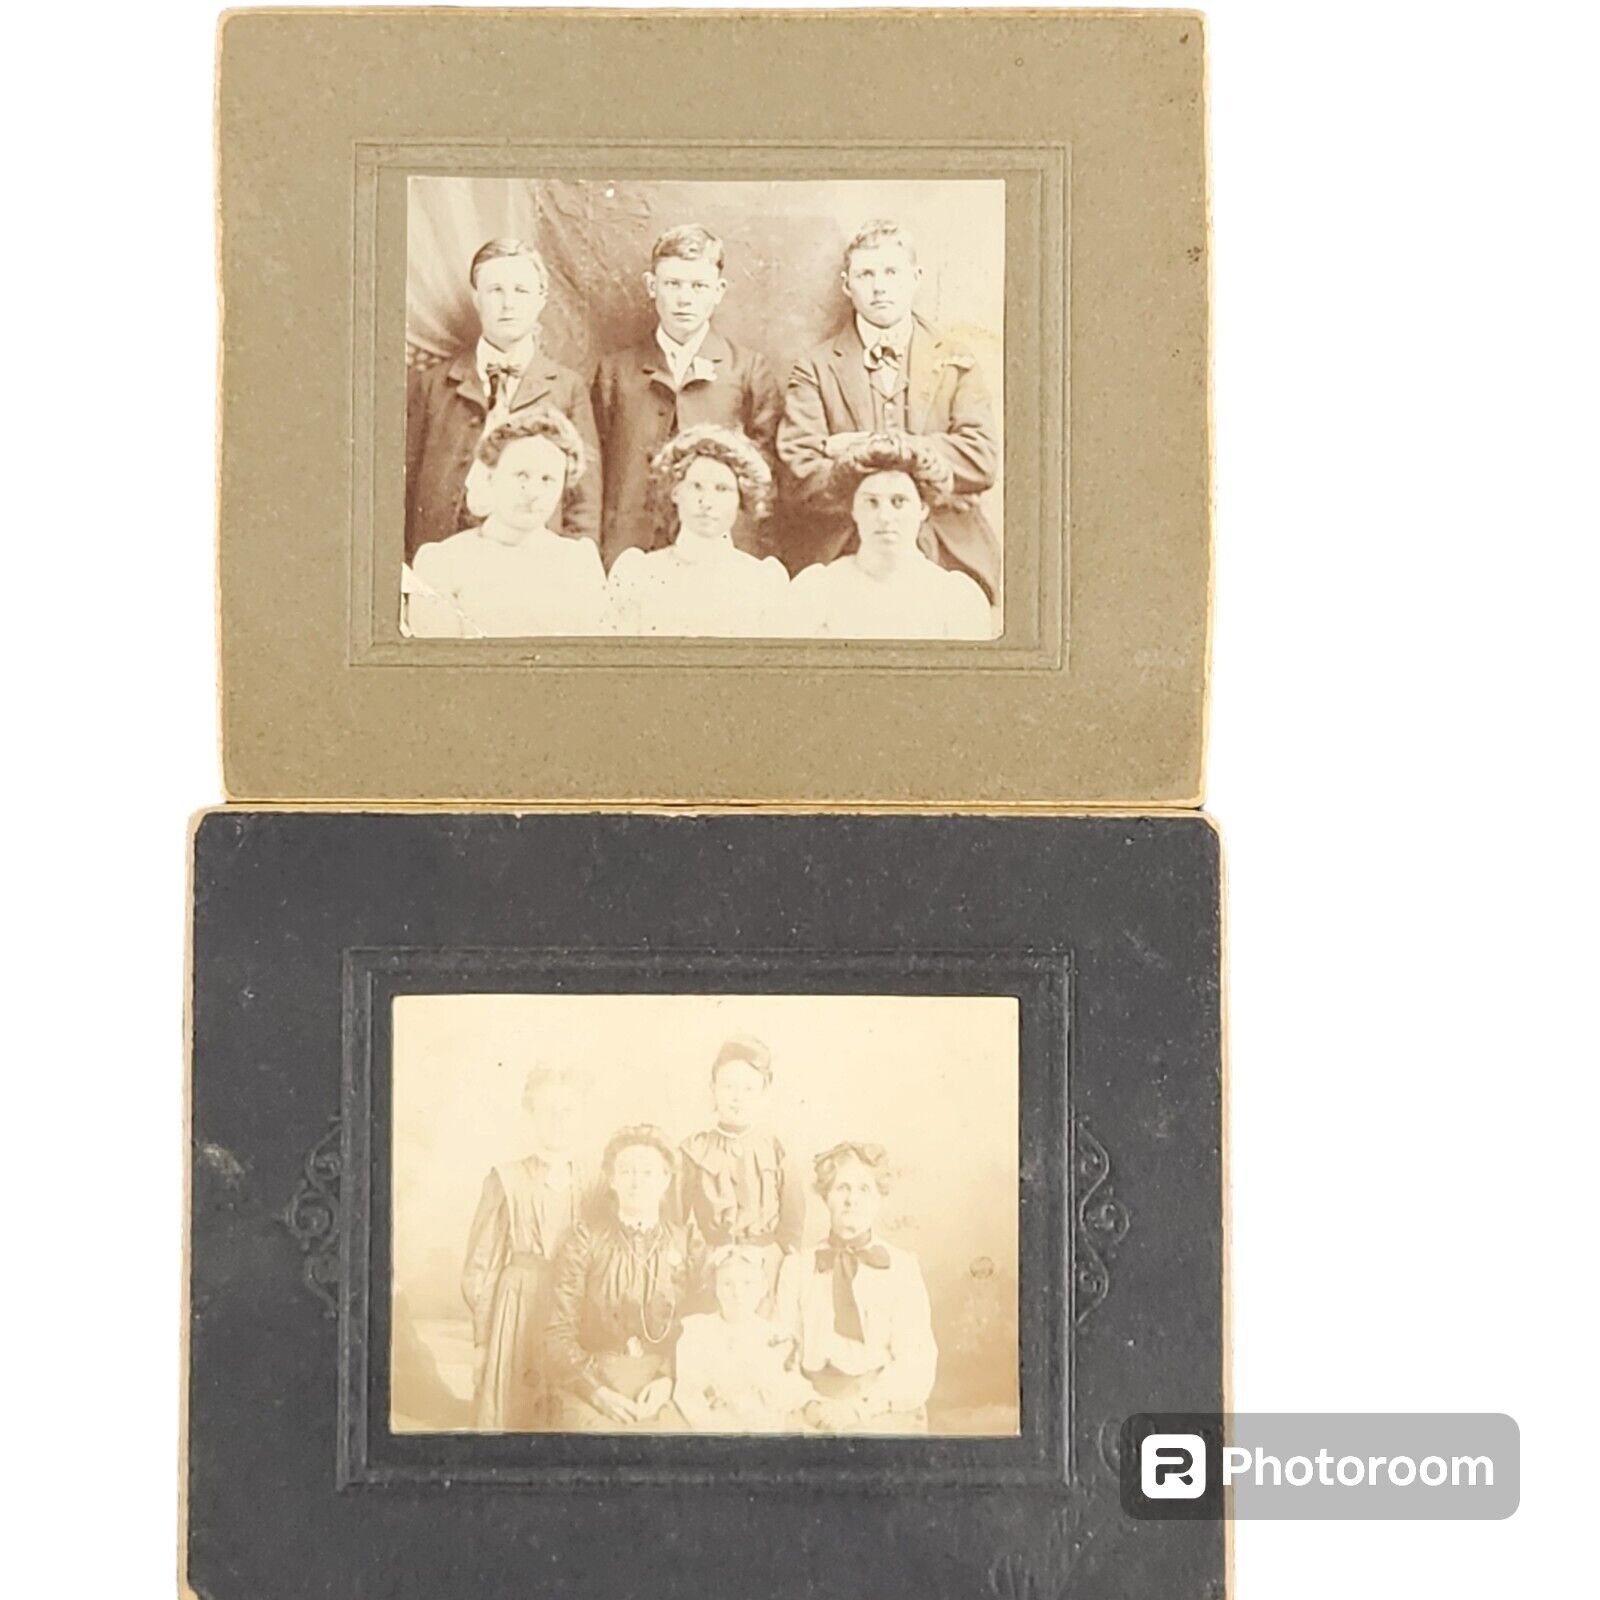 2 Antique 1800s-1900s Studio Cabinet Photographs Black White Photos Cardstock 